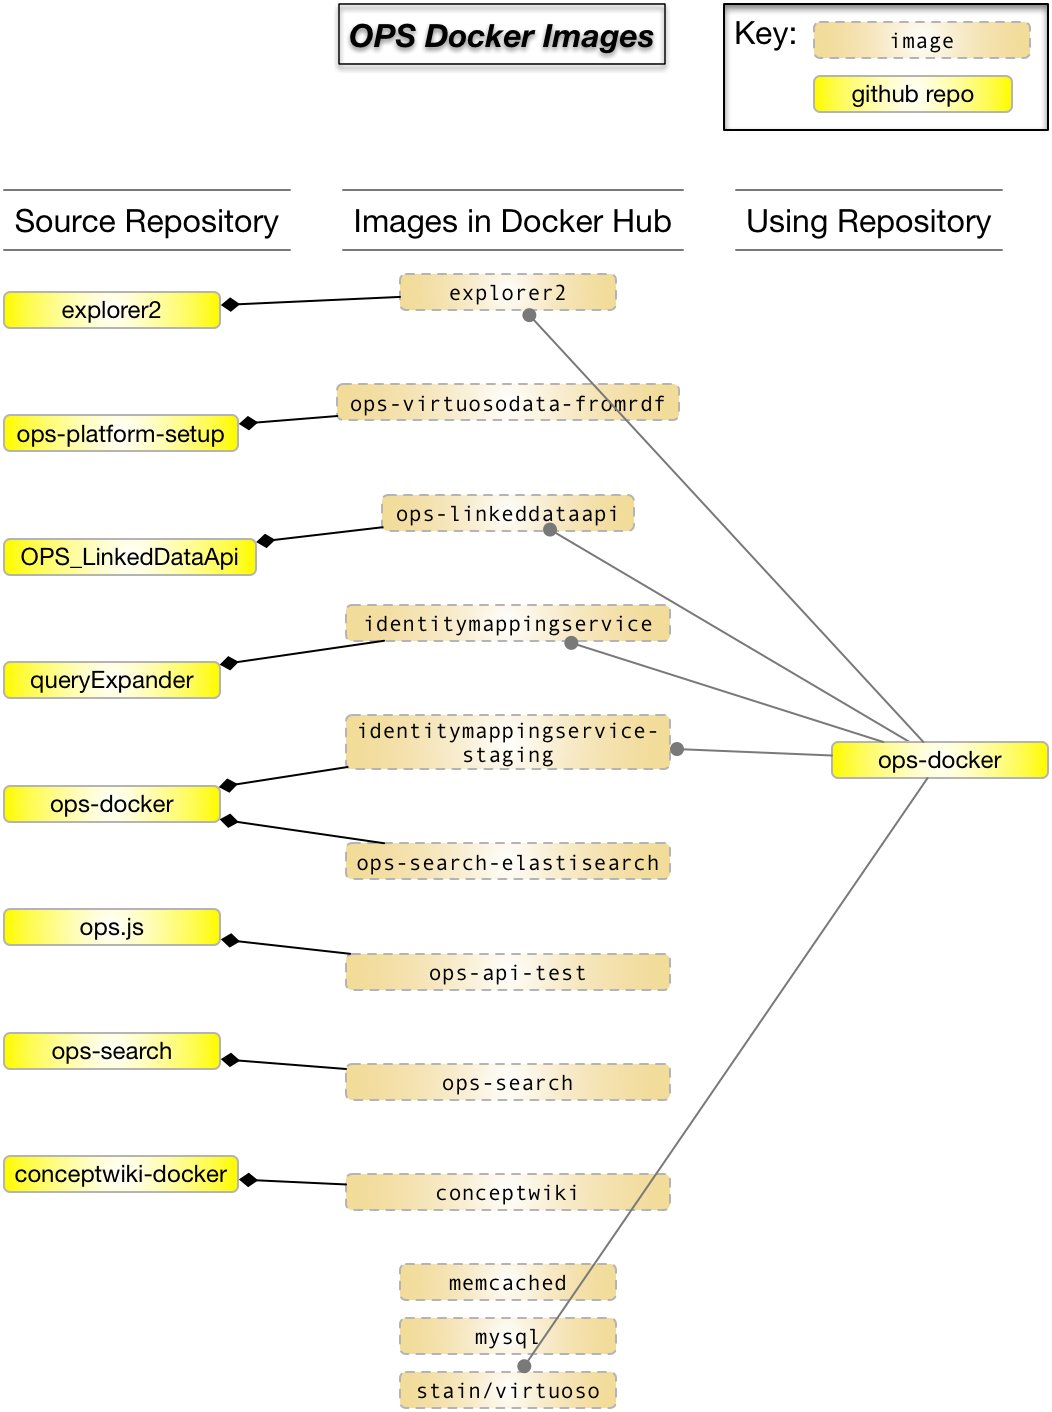 Diagram of images in docker hub.